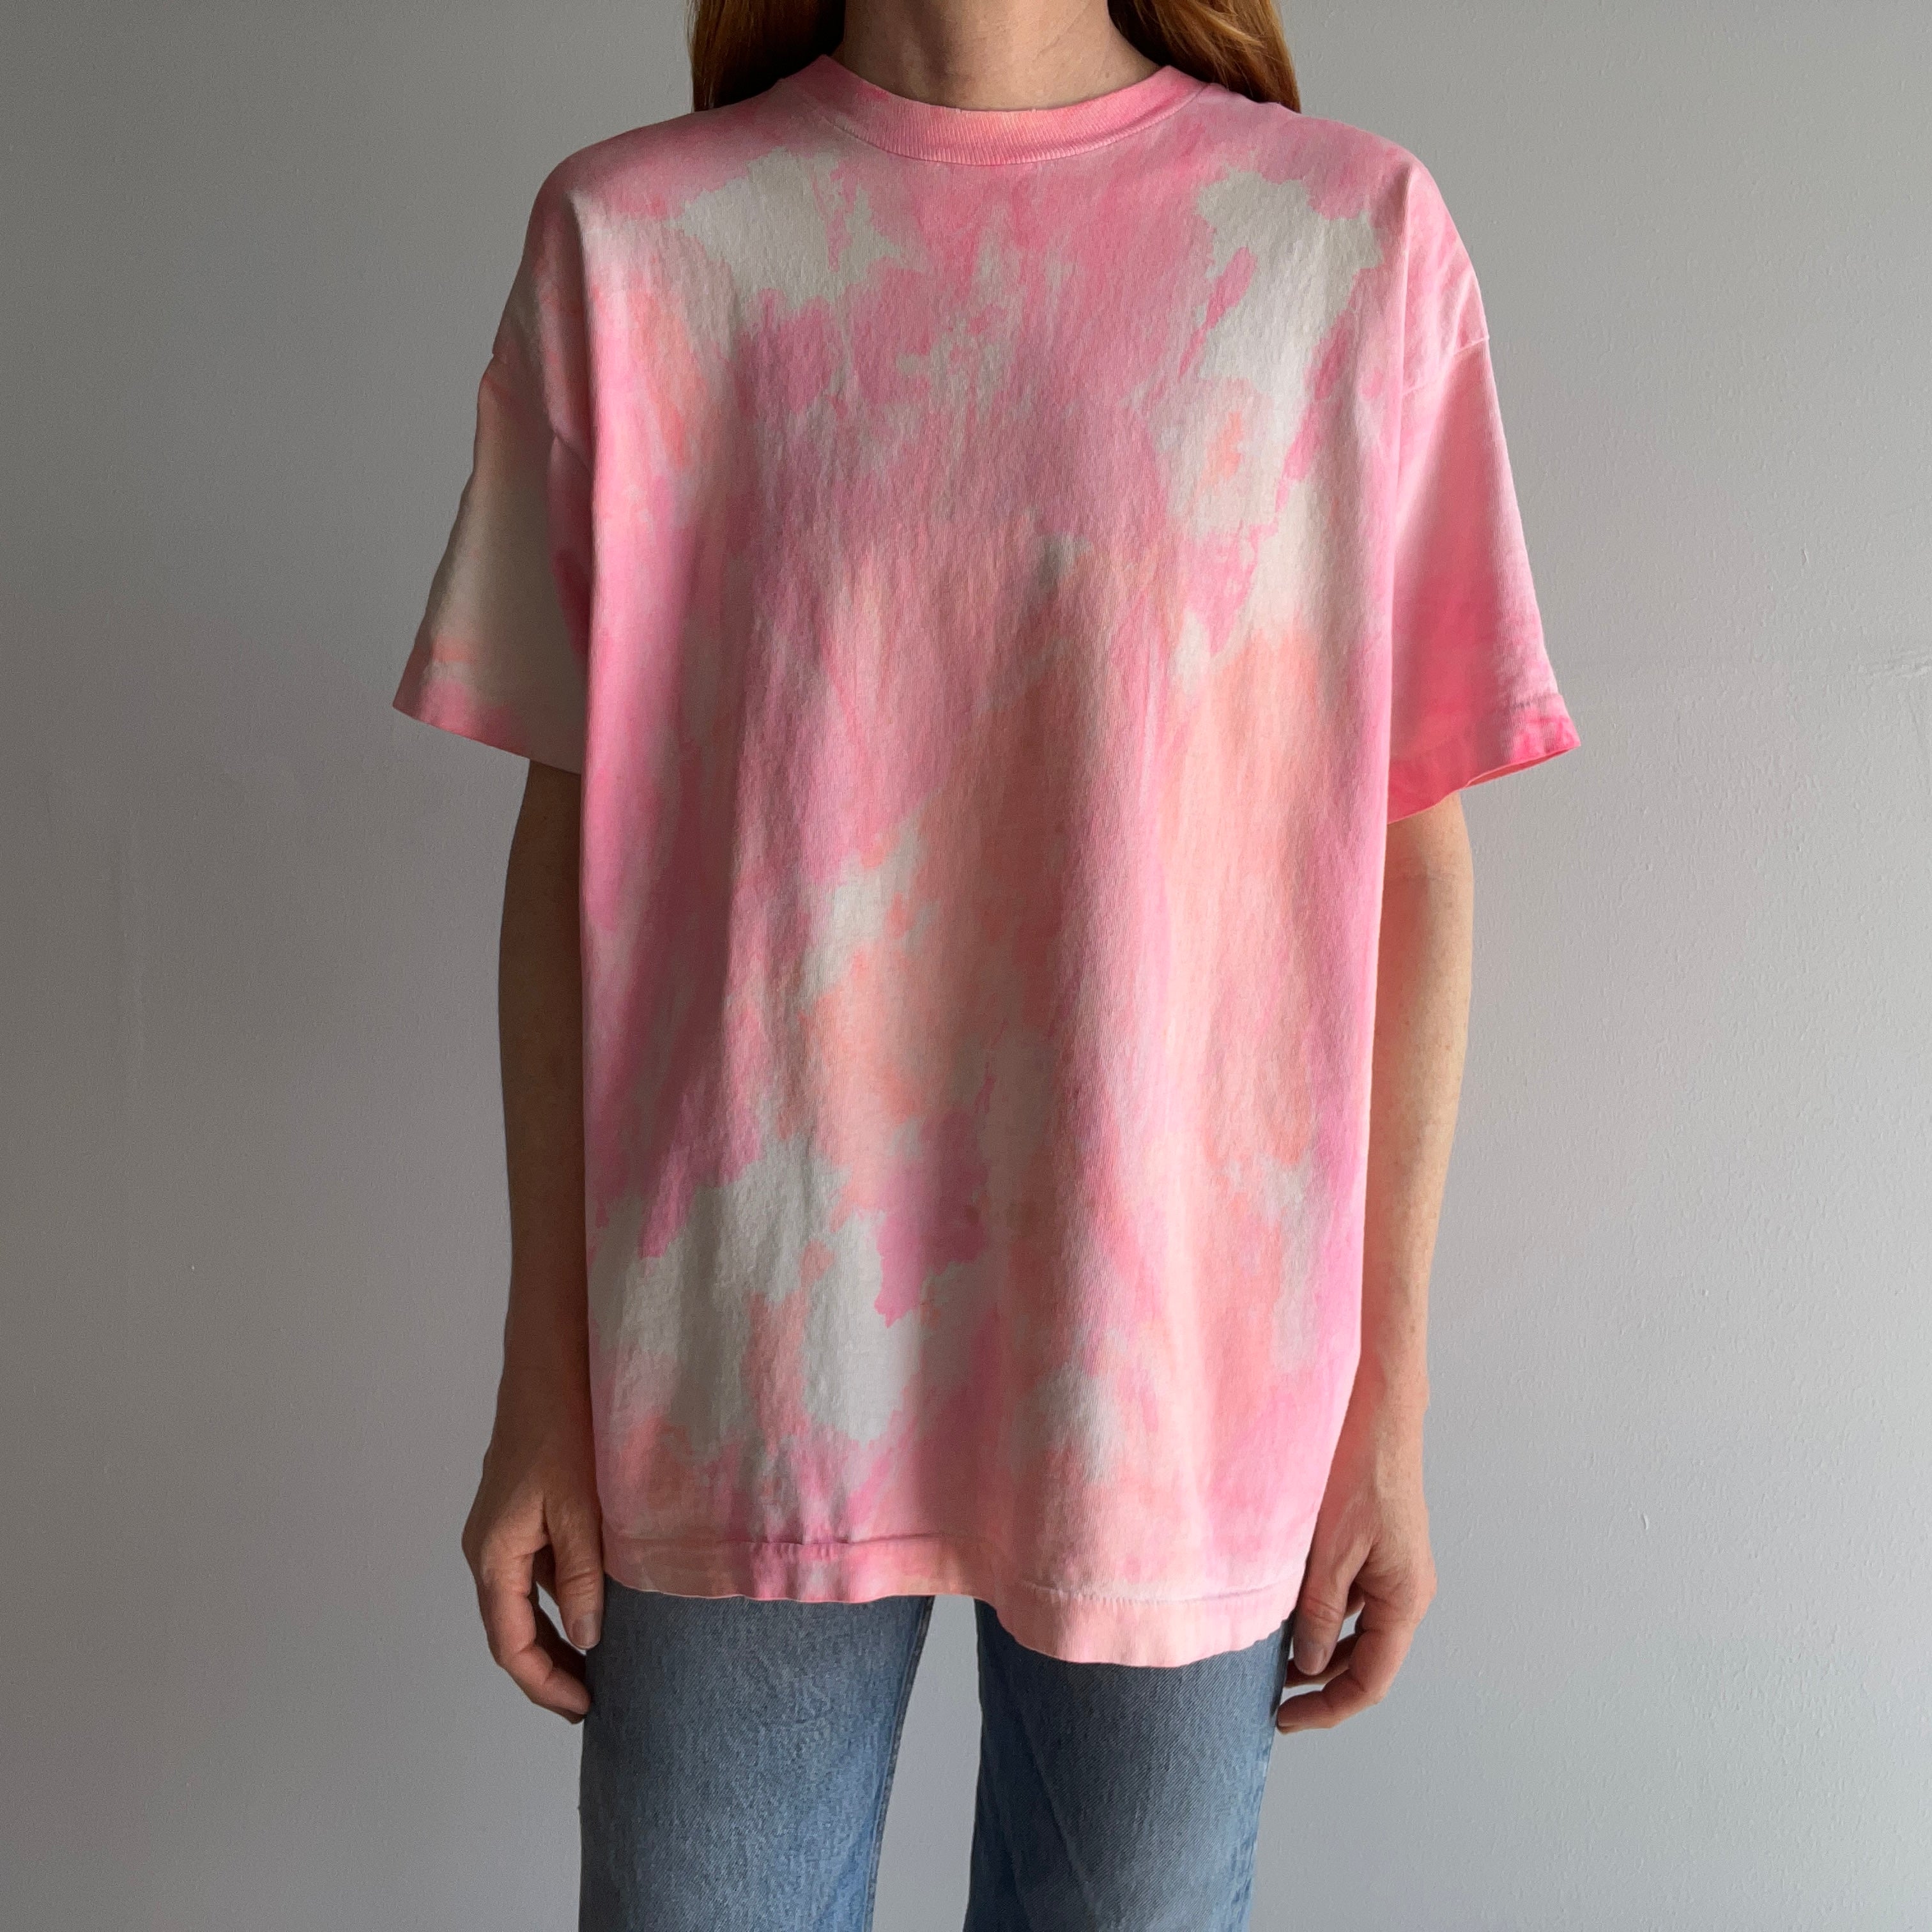 1980s Neon Tie Dye Cotton T-Shirt by FOTL